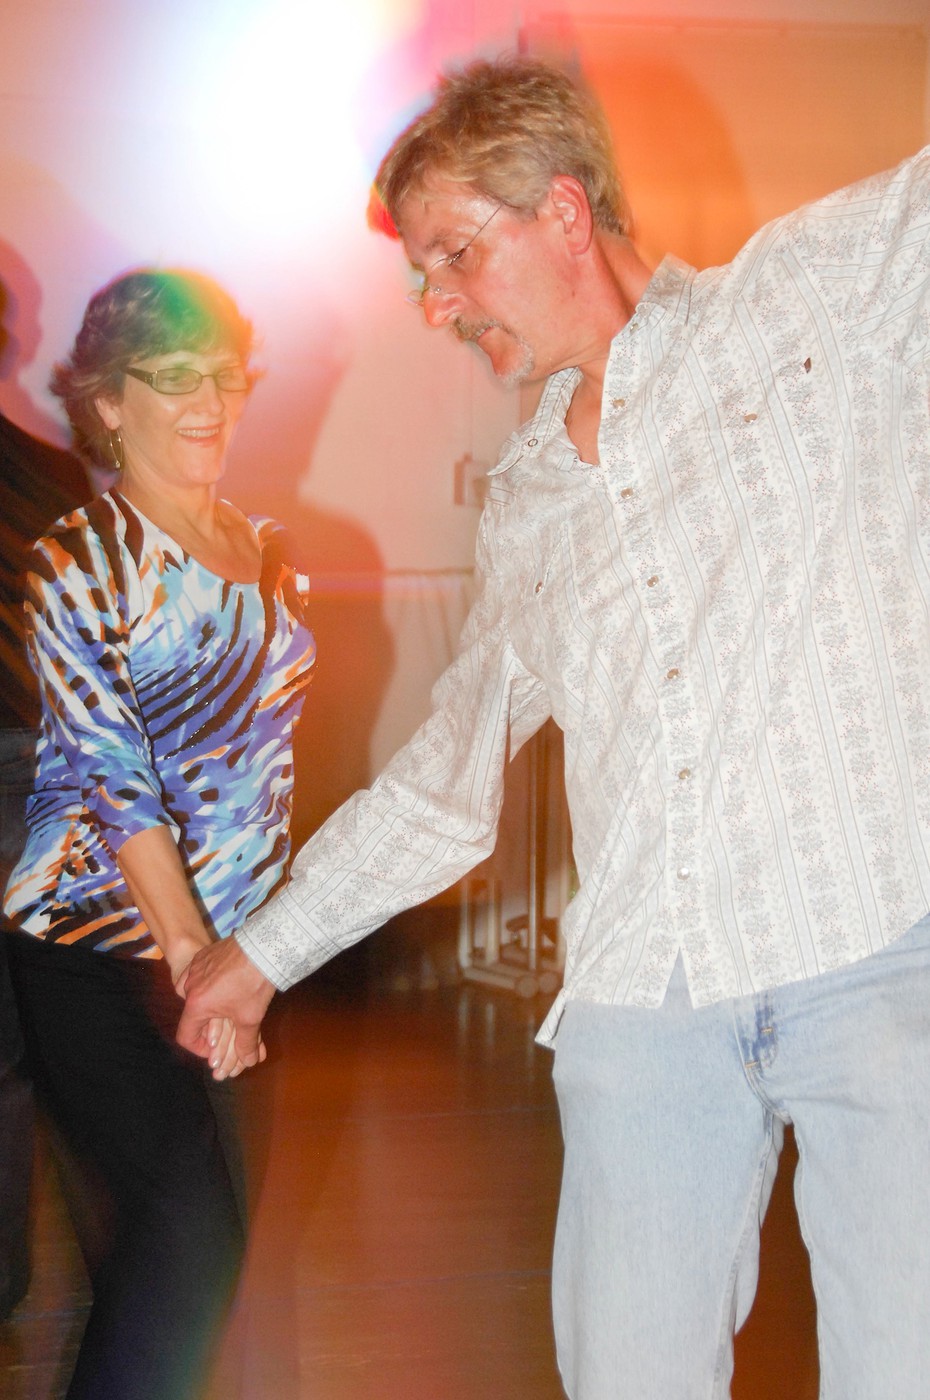 Al & Cindy dance West Coast Swing in Norwalk, CT on April 19, 2012